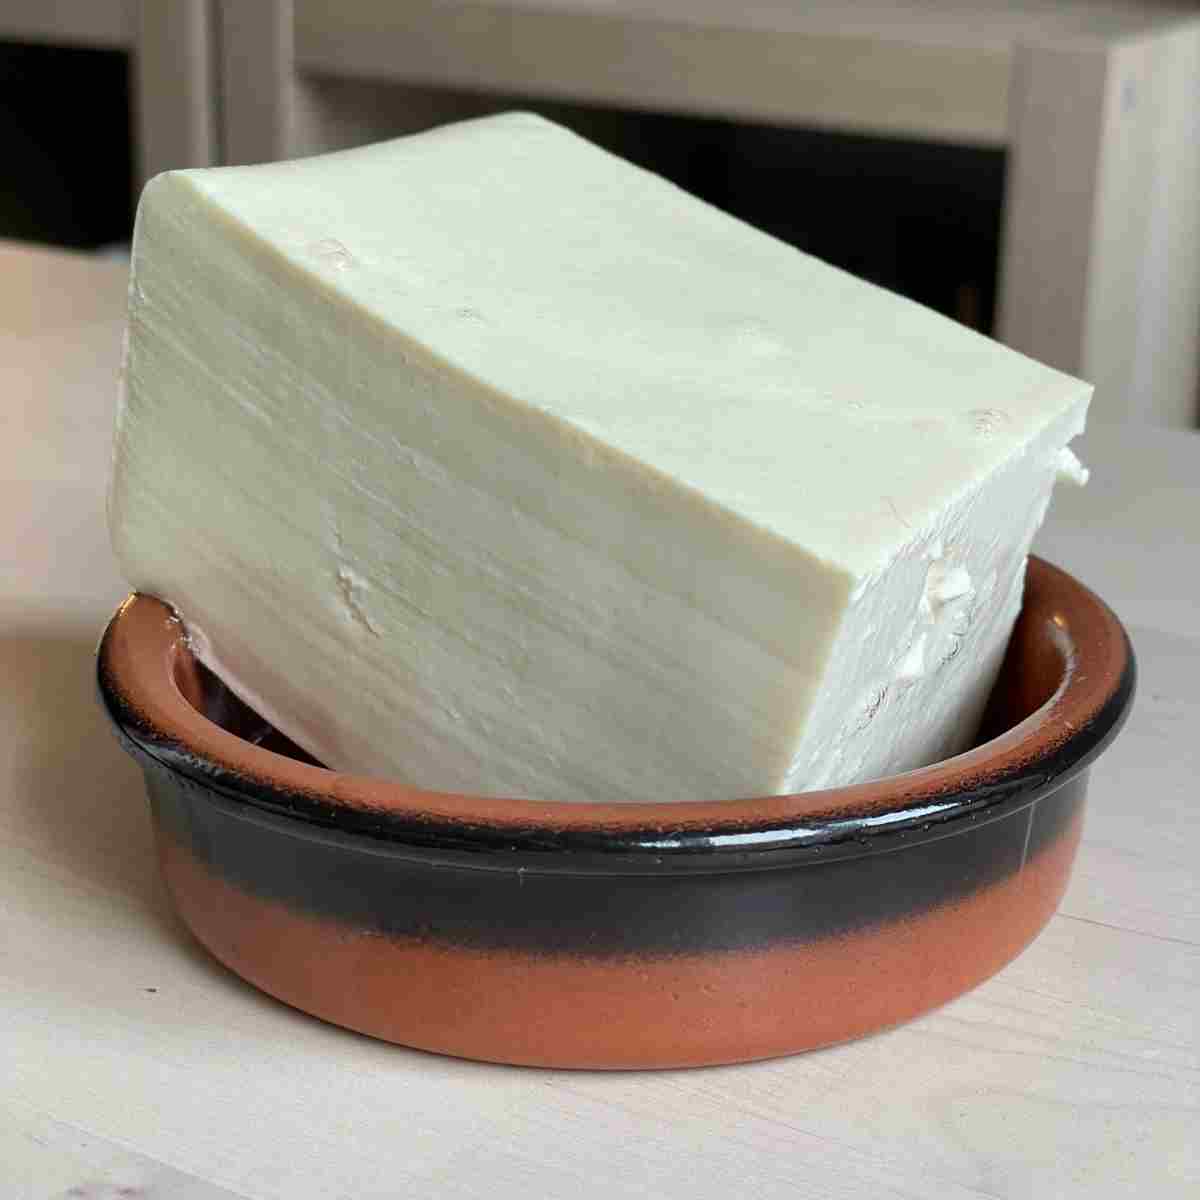 block of firm tofu